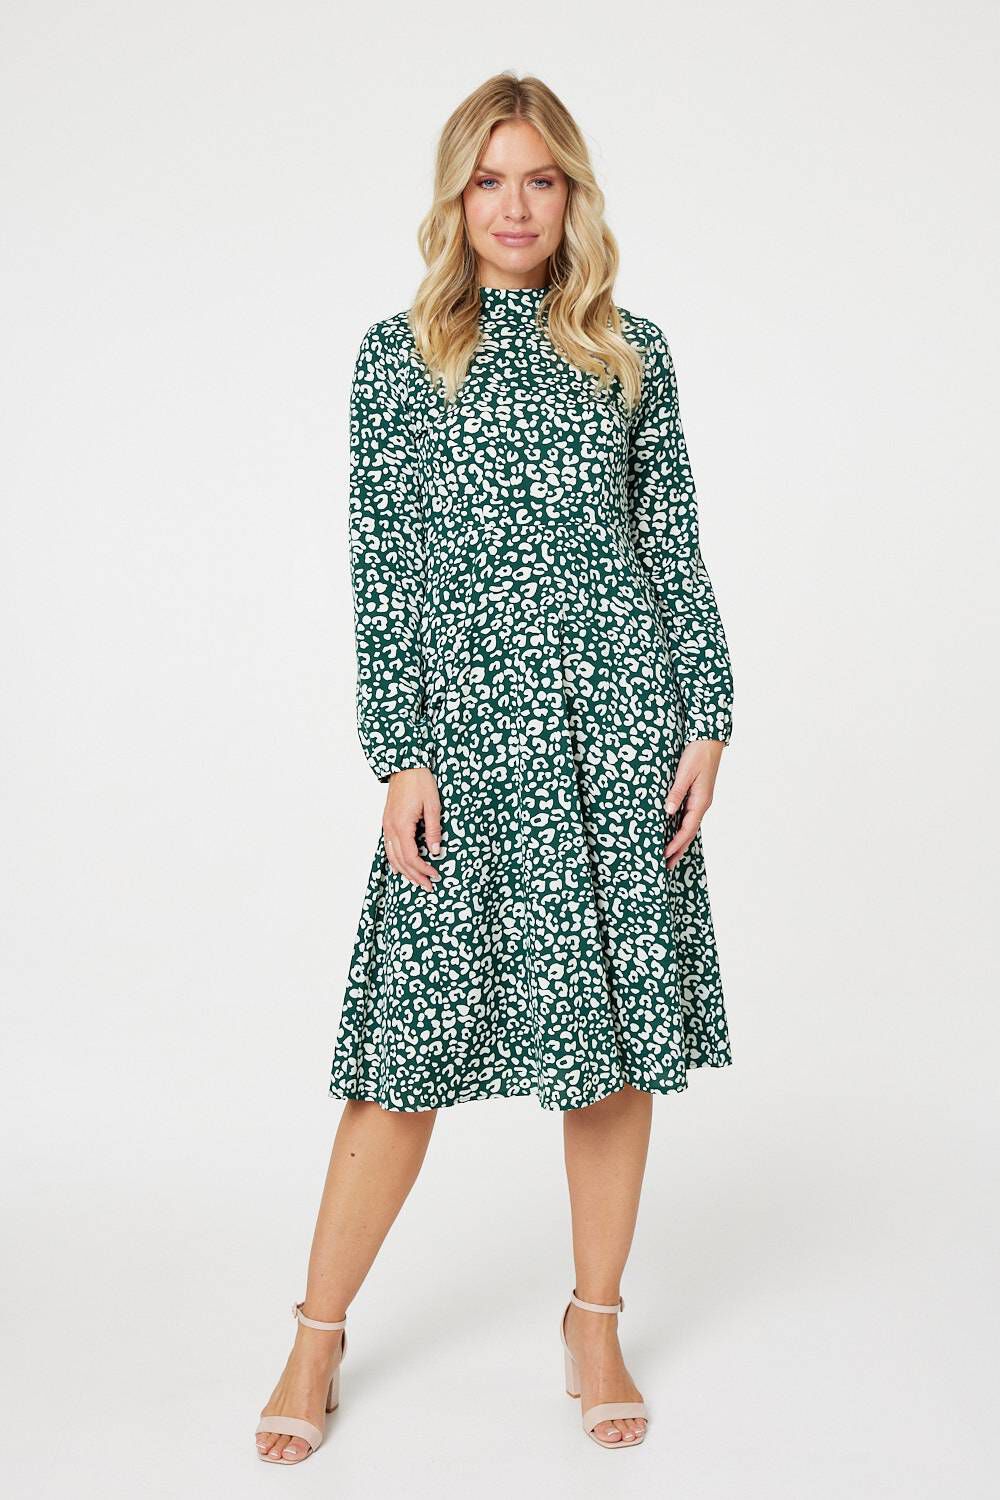 Izabel London Women’s Green Leopard Print Stylish High Neck Tea Dress, Size: 10